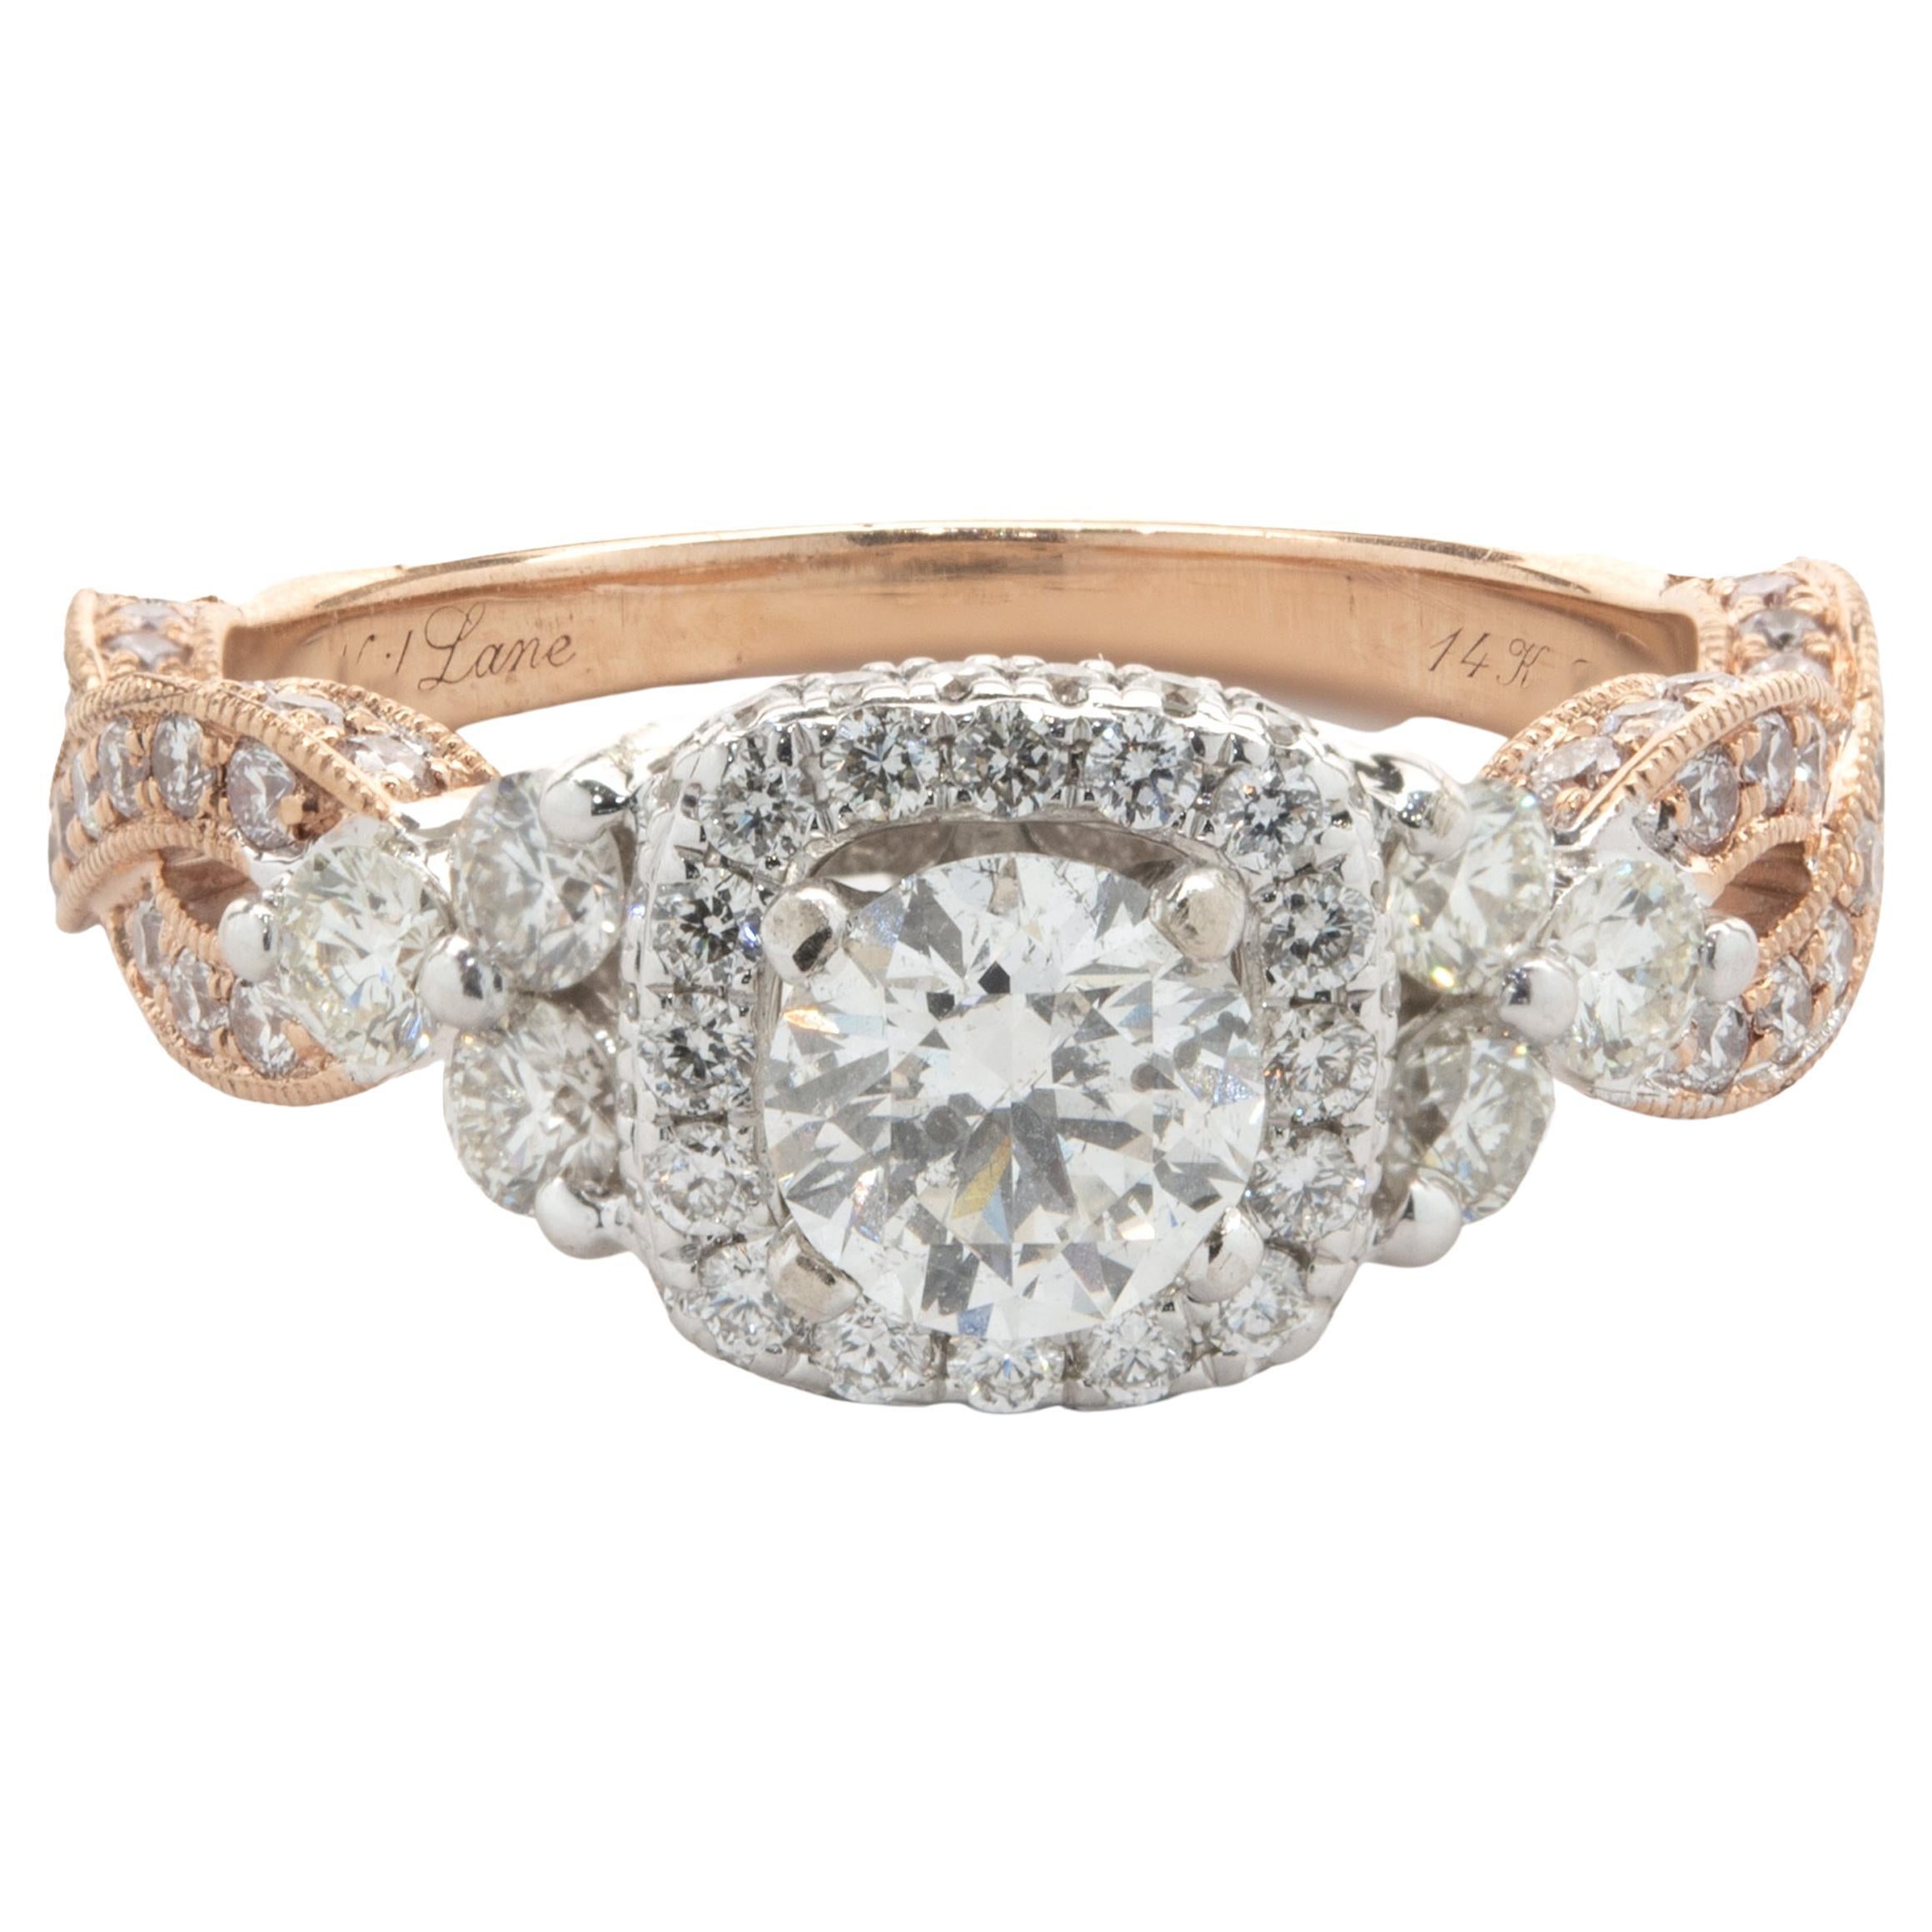 Neil Lane 14k White and Rose Gold Round Brilliant Cut Diamond Engagement Ring